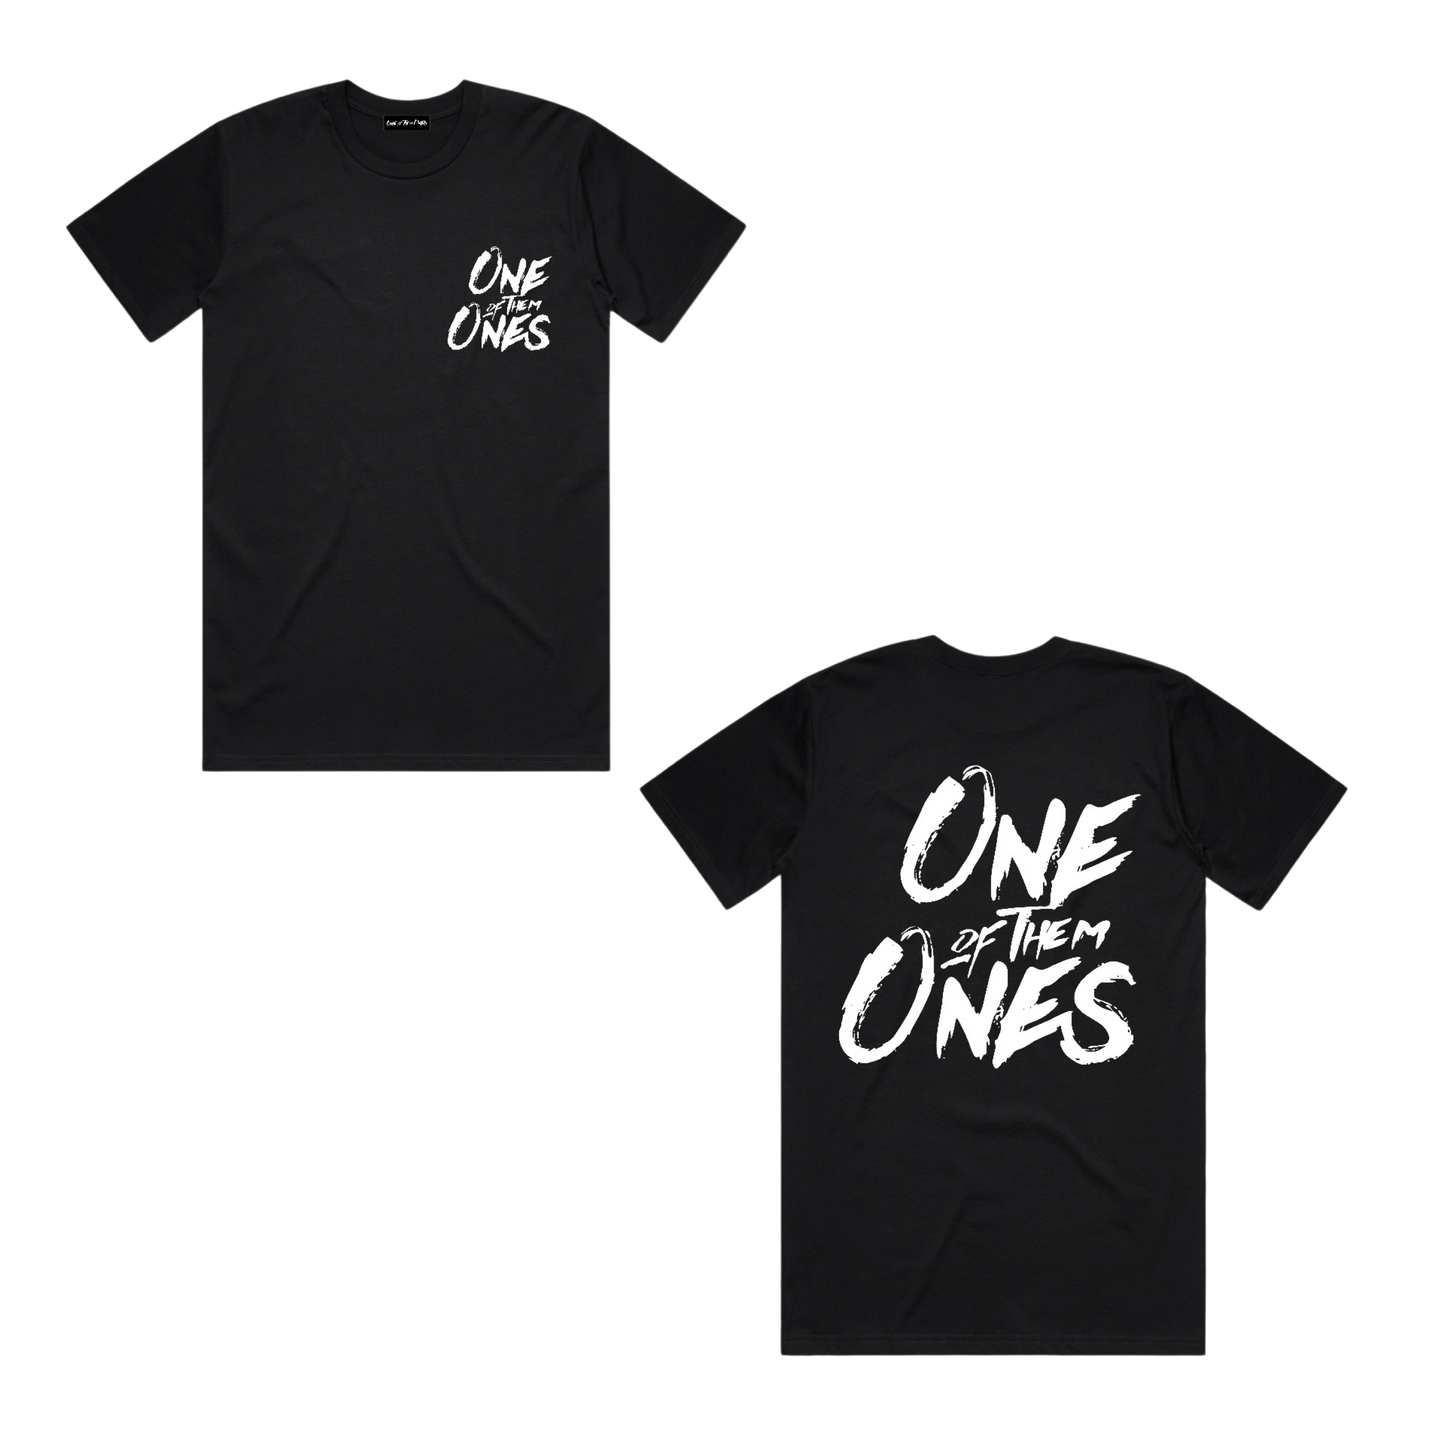 Organik Lyfestyle - 1OfThem1's OG Black/White T-Shirt